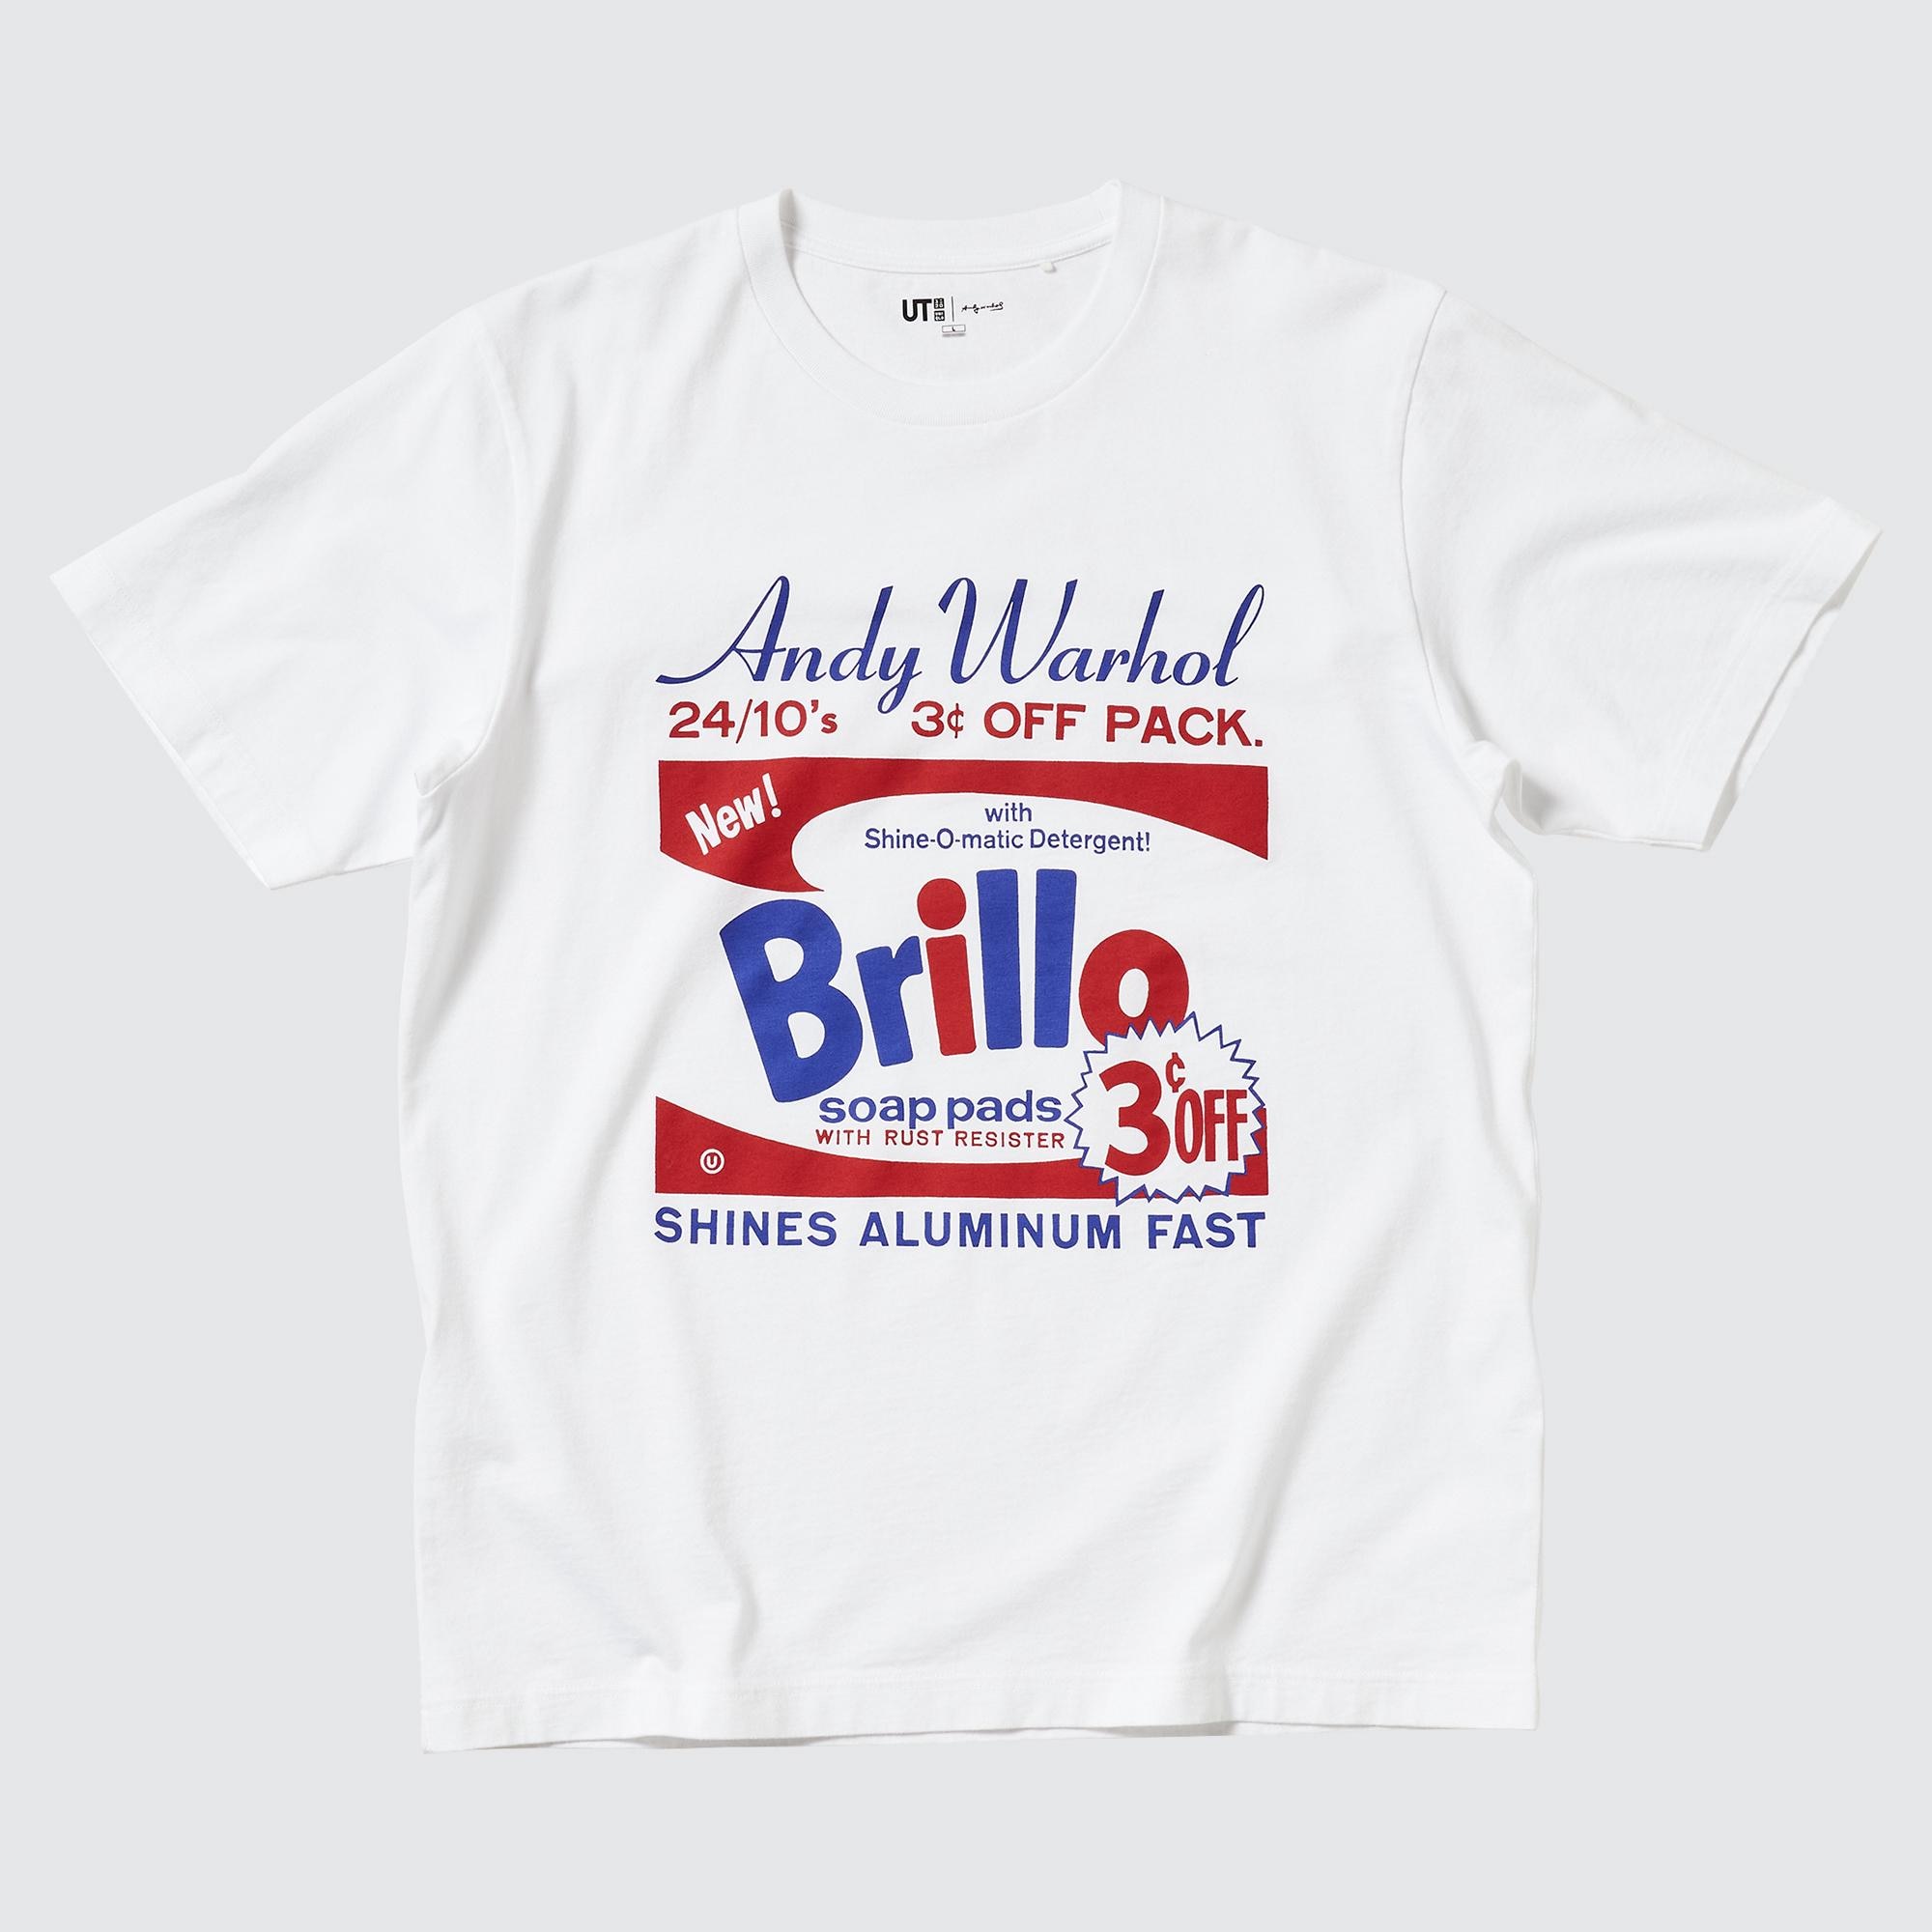 Andy Warhol UT (Short Sleeve Graphic T-Shirt)